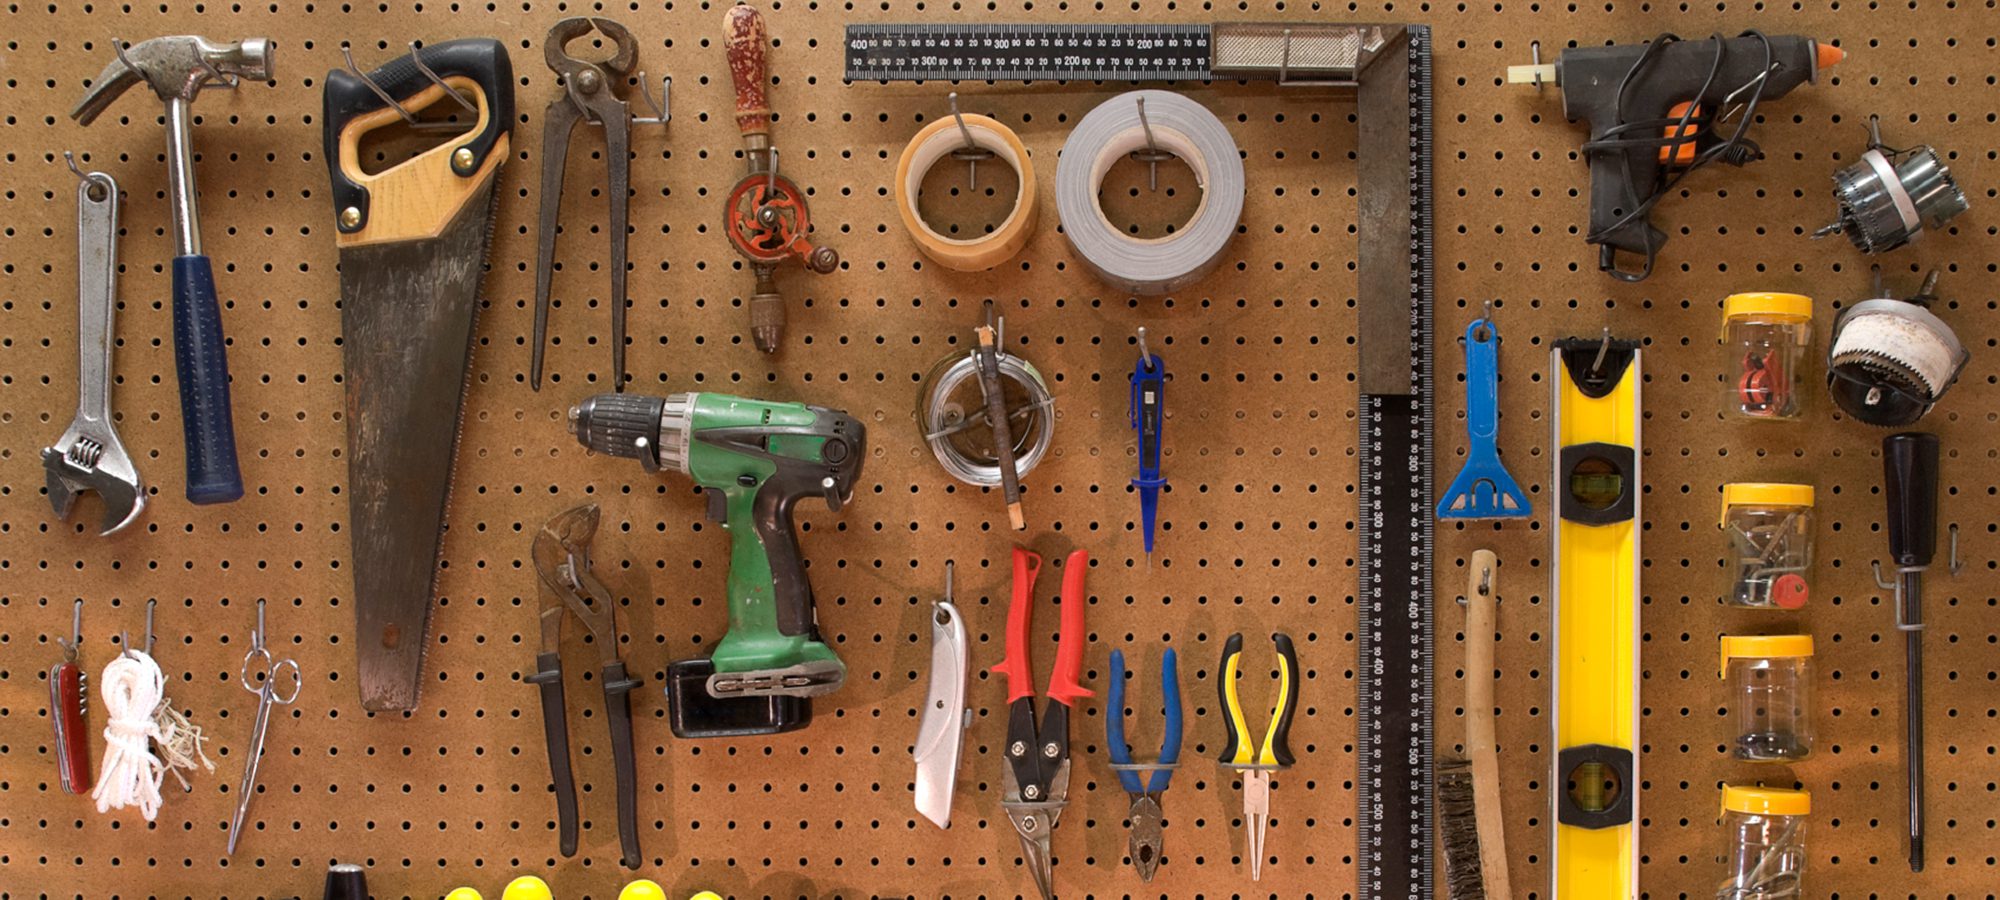 tools on pegboard garage storage